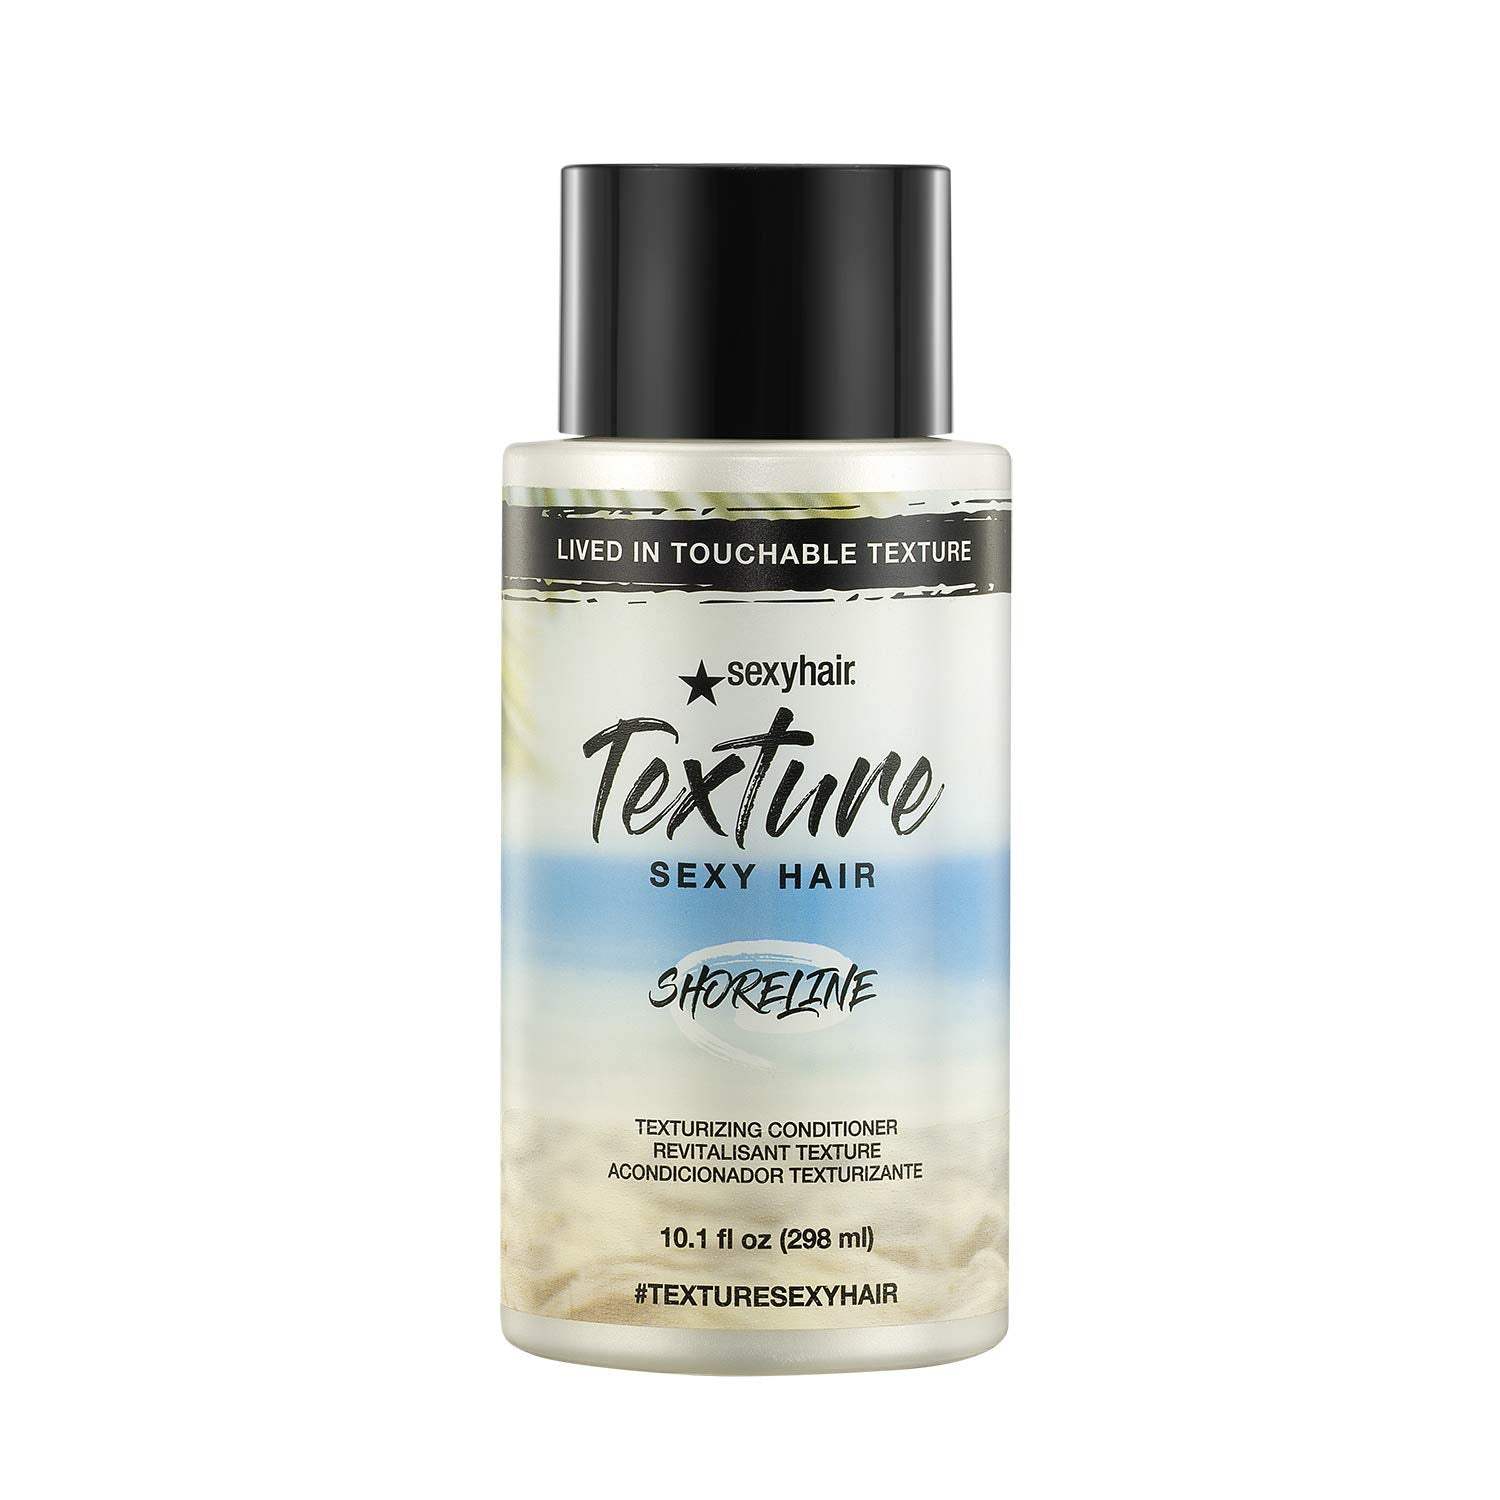 SexyHair Texture Shoreline Texturizing Conditioner - 10.1 oz (Buy 3 Get 1 Free Mix & Match)